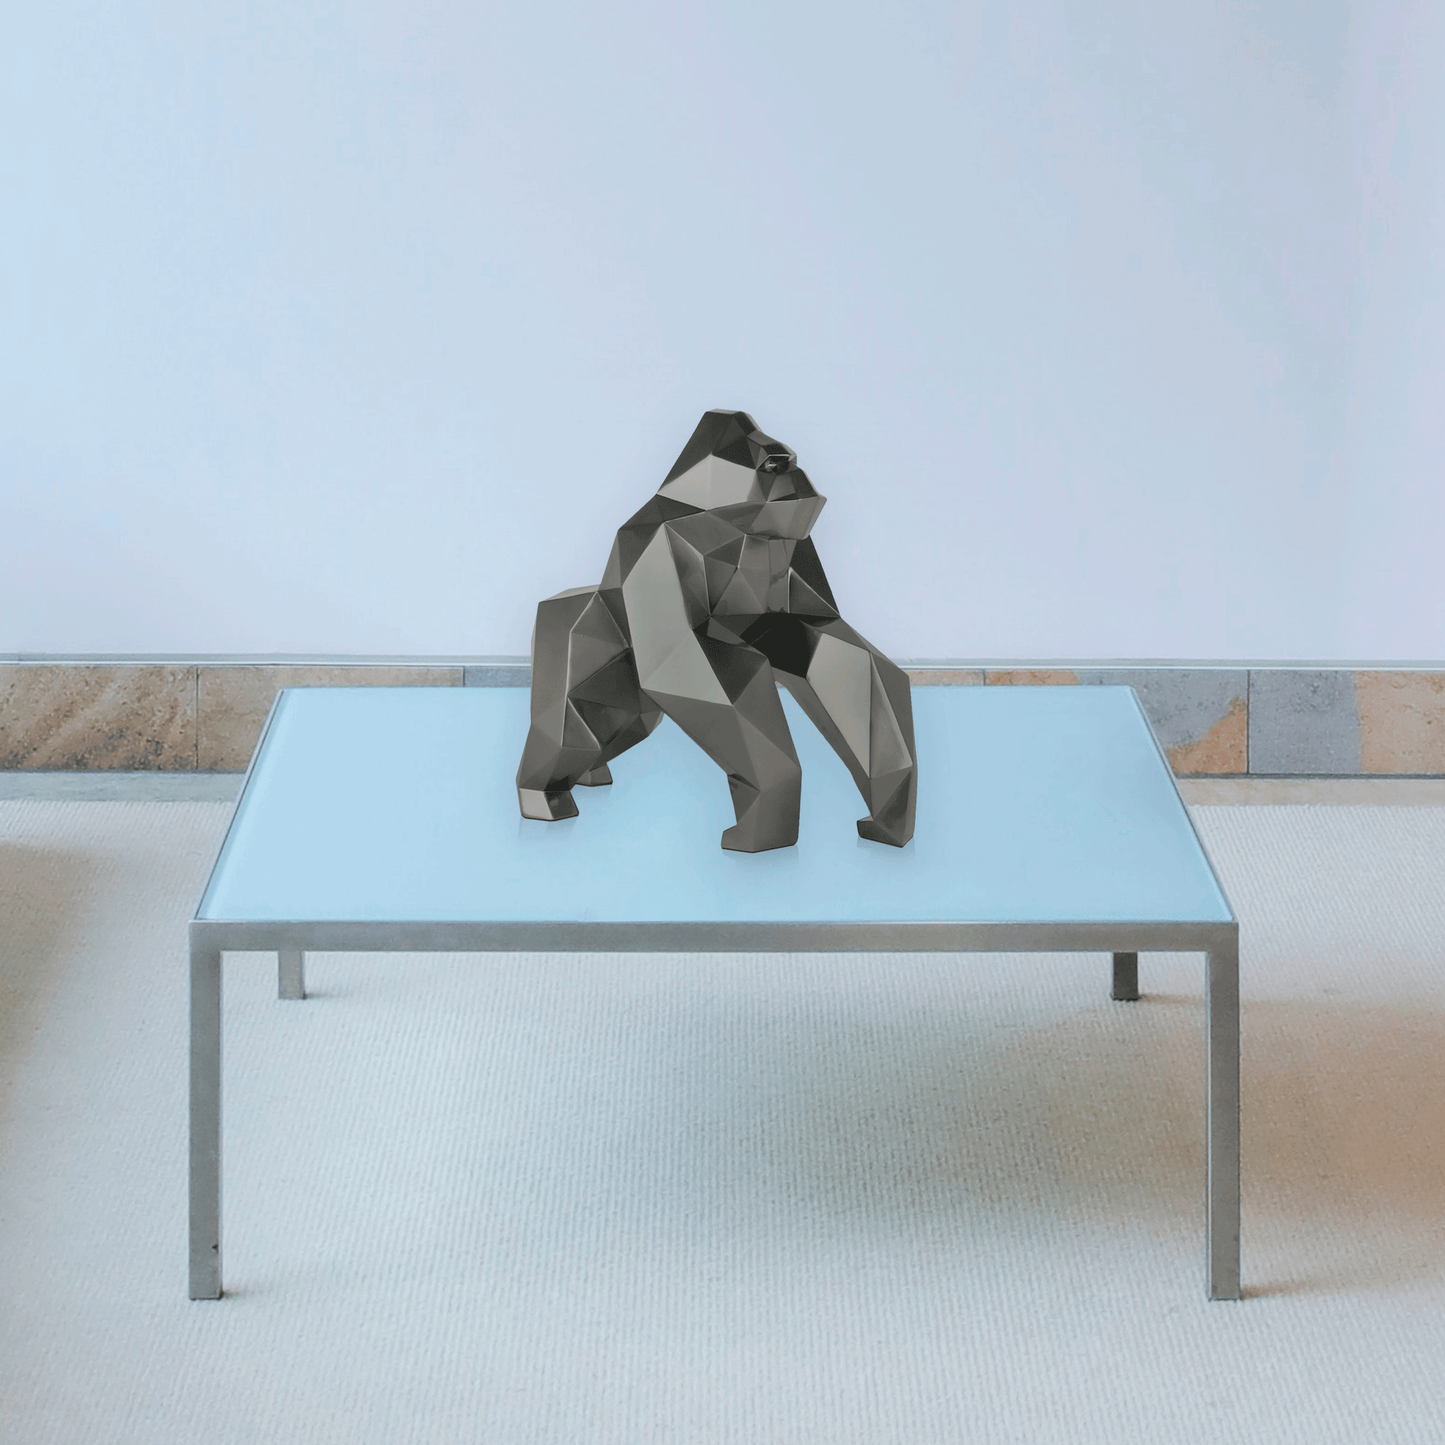 Grauer Origami-Gorilla